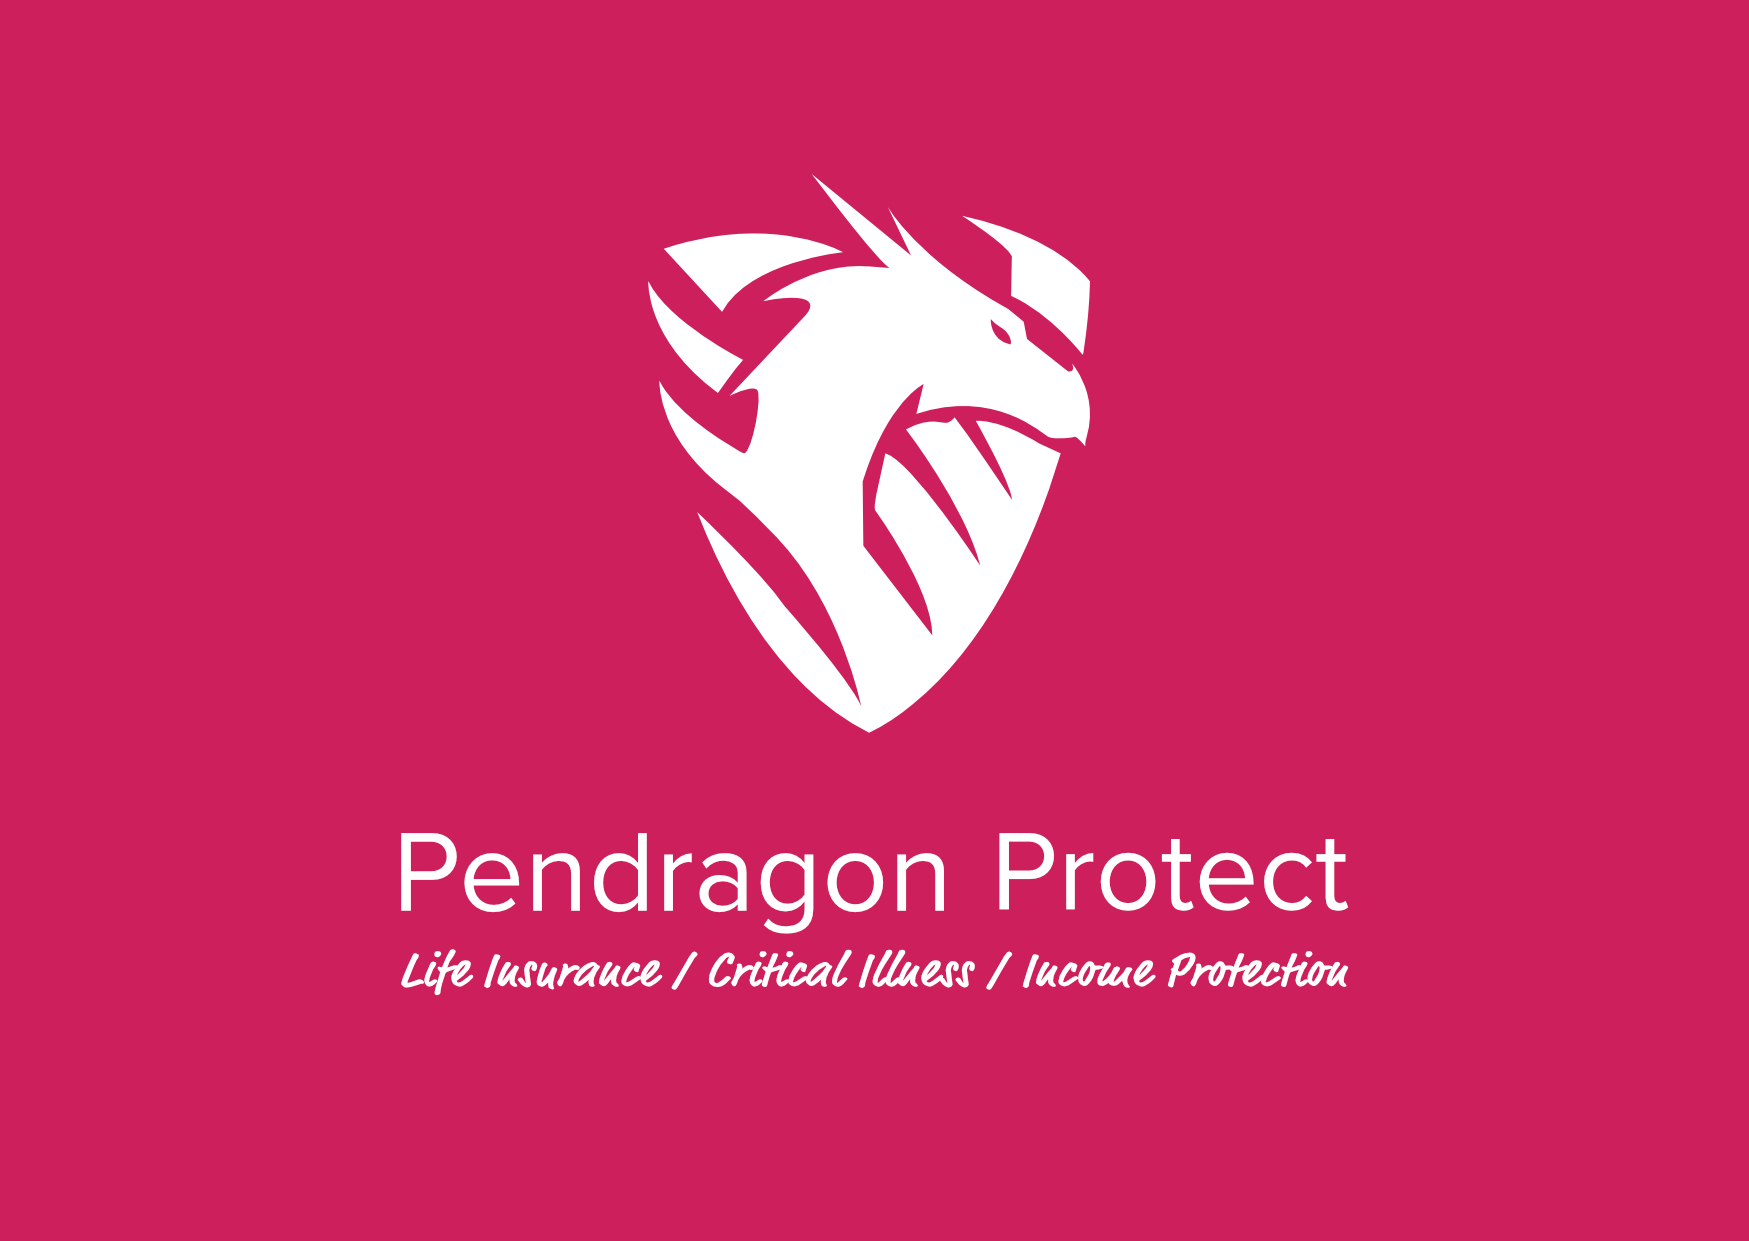 Pendragon Protect's logo